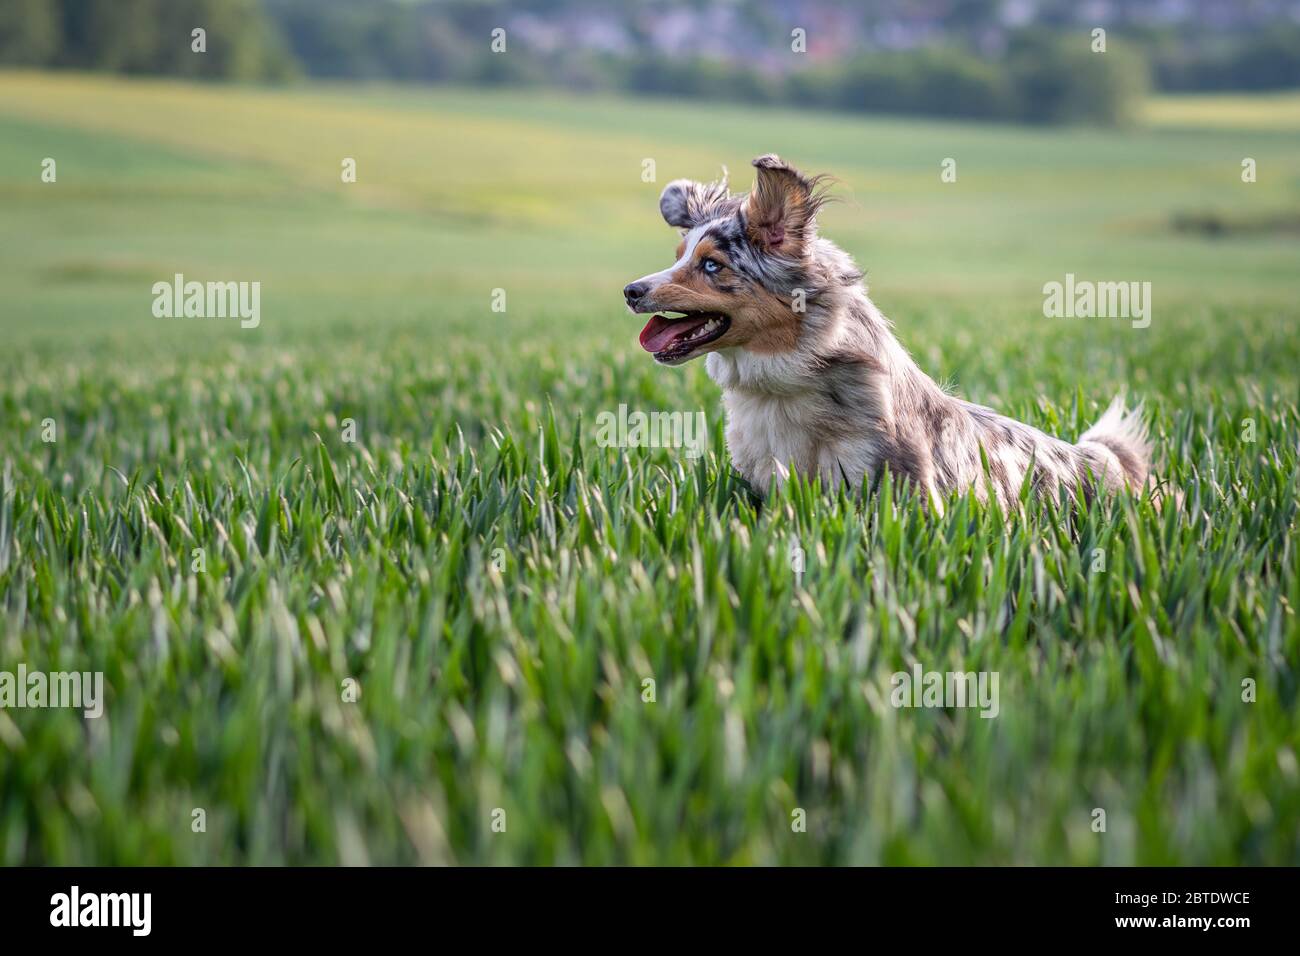 Dog australian shepherd blue merle jumping in green kornfield showing teeth Stock Photo